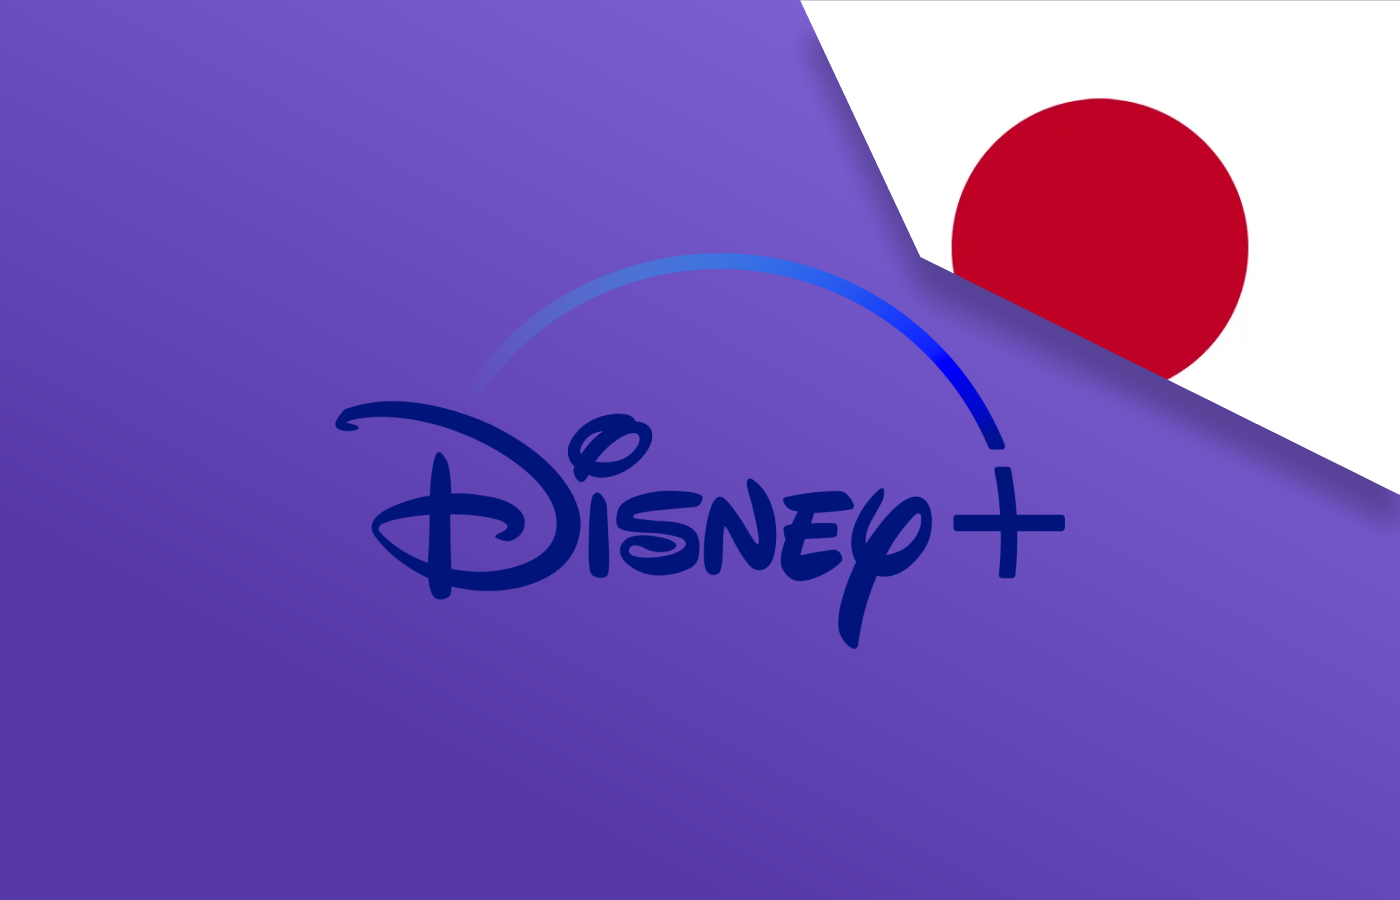 Watch Disney Plus in Japan